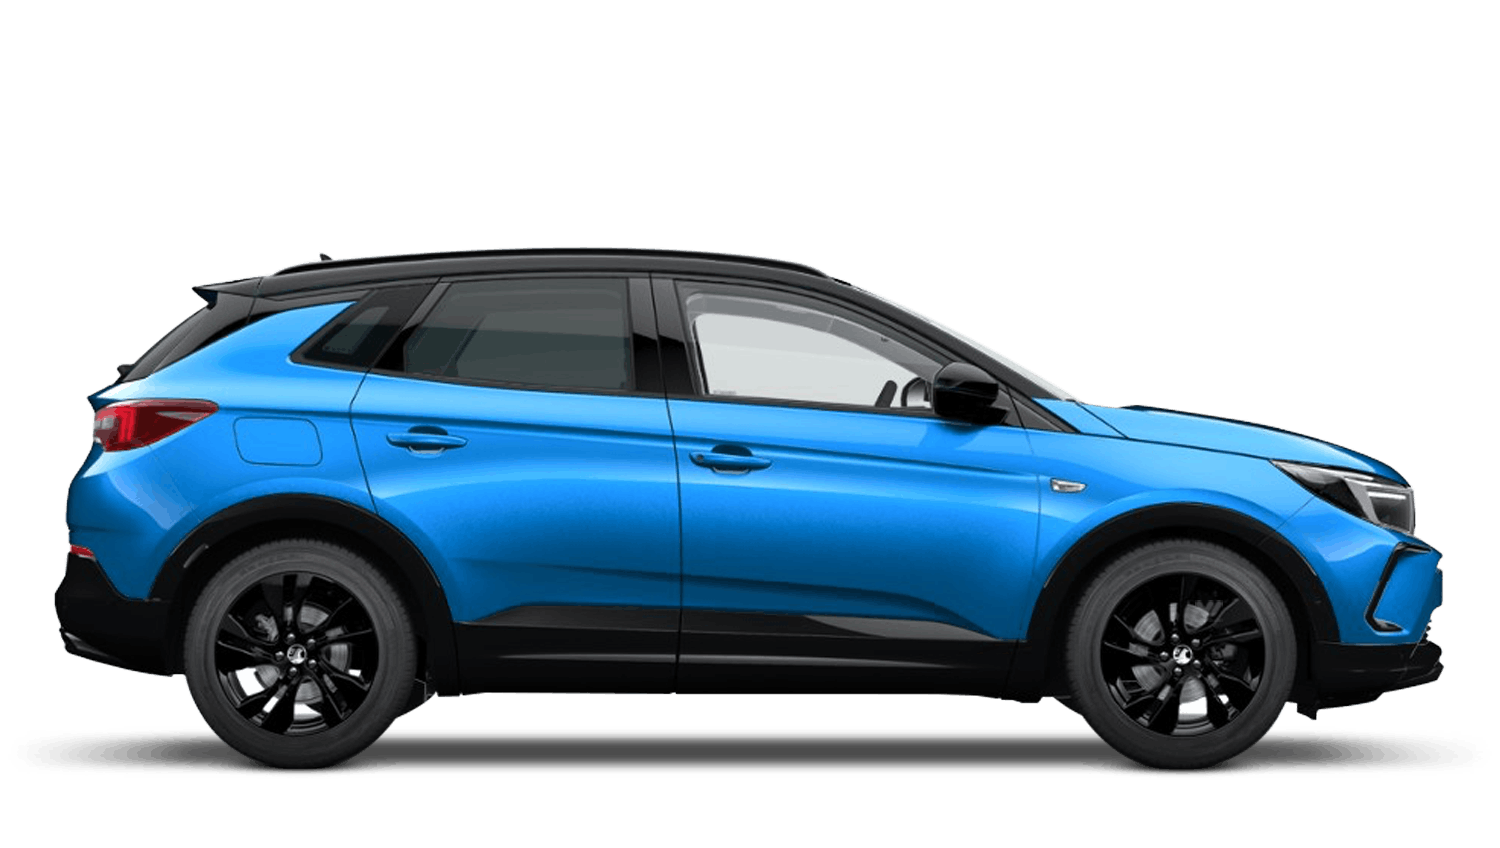 Cobalt Blue (Metallic) New Vauxhall Grandland